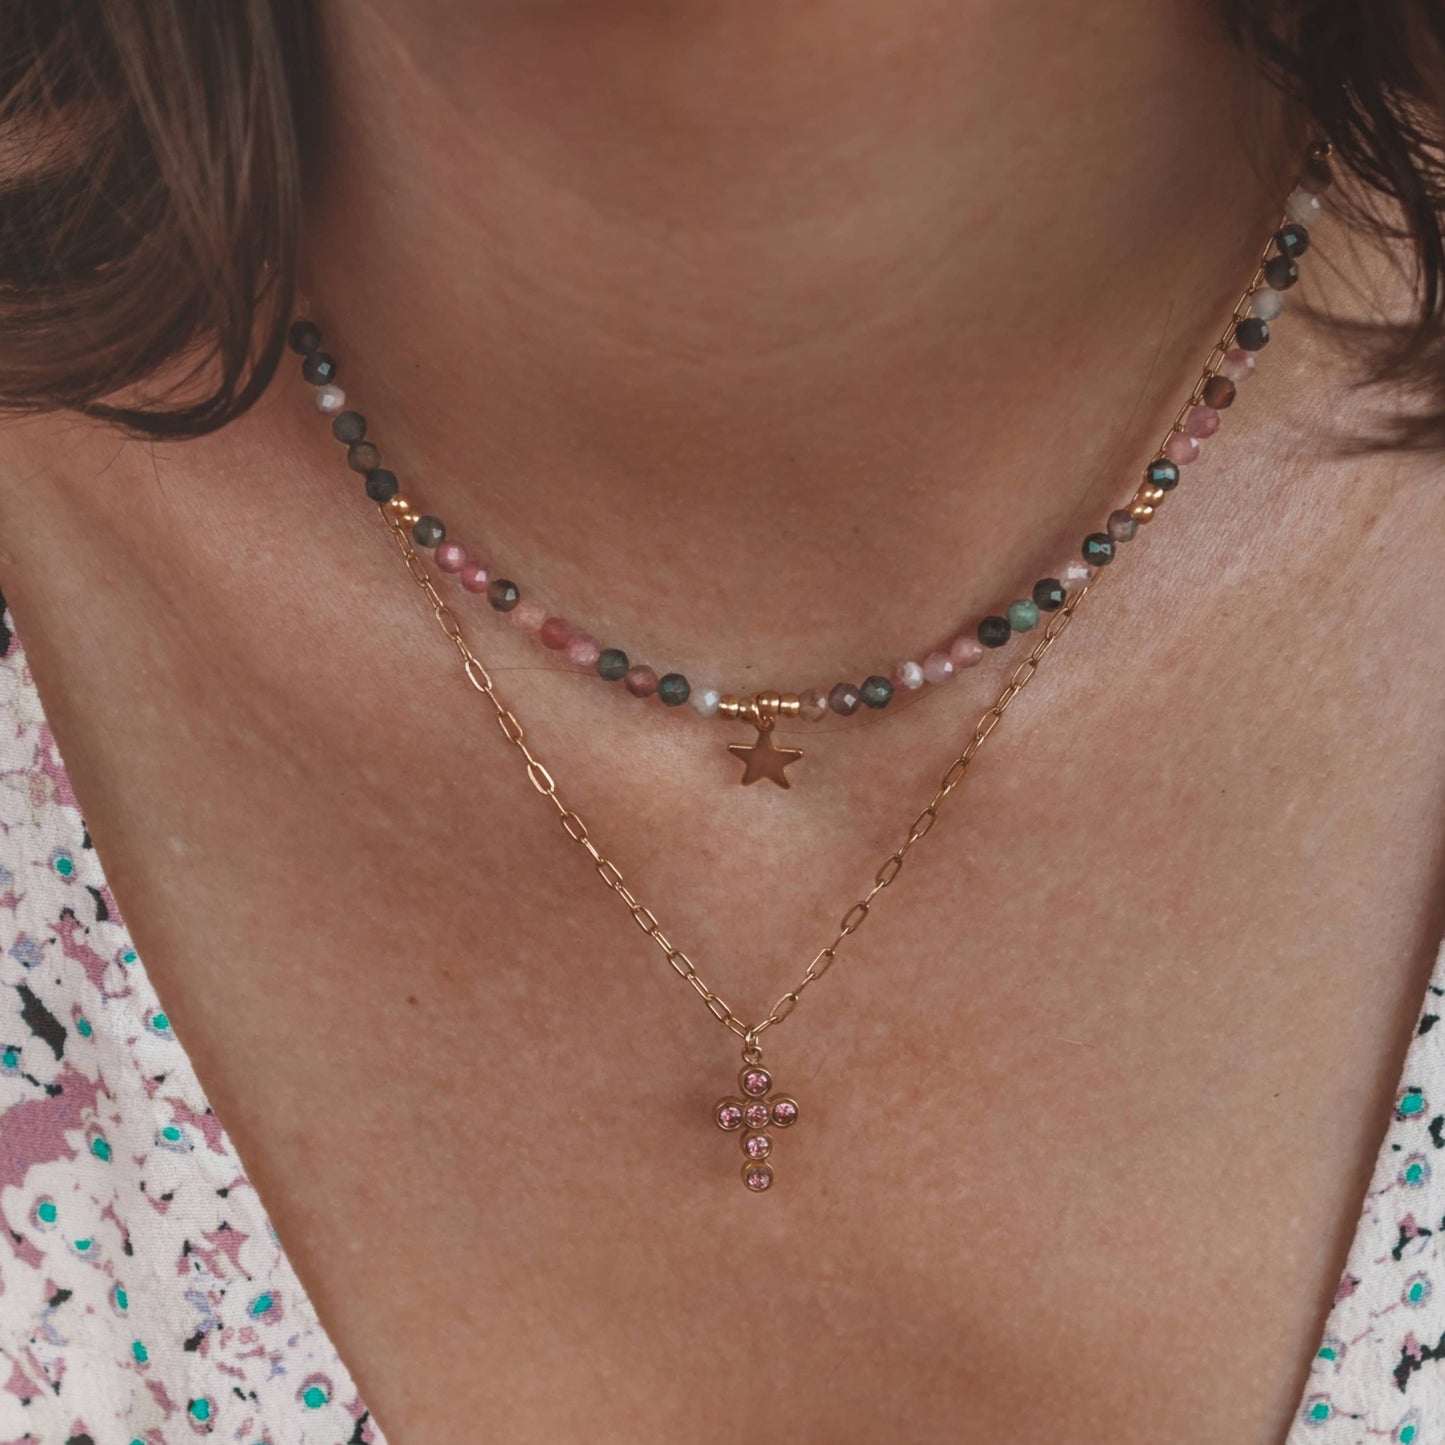 Hudson lilac necklace